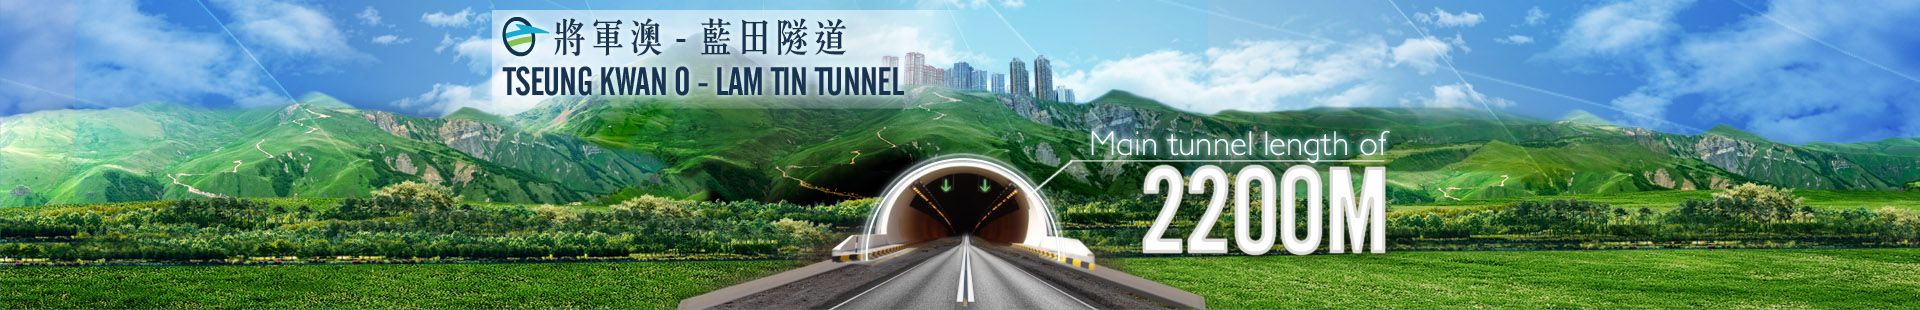 Main tunnel length of 2200M